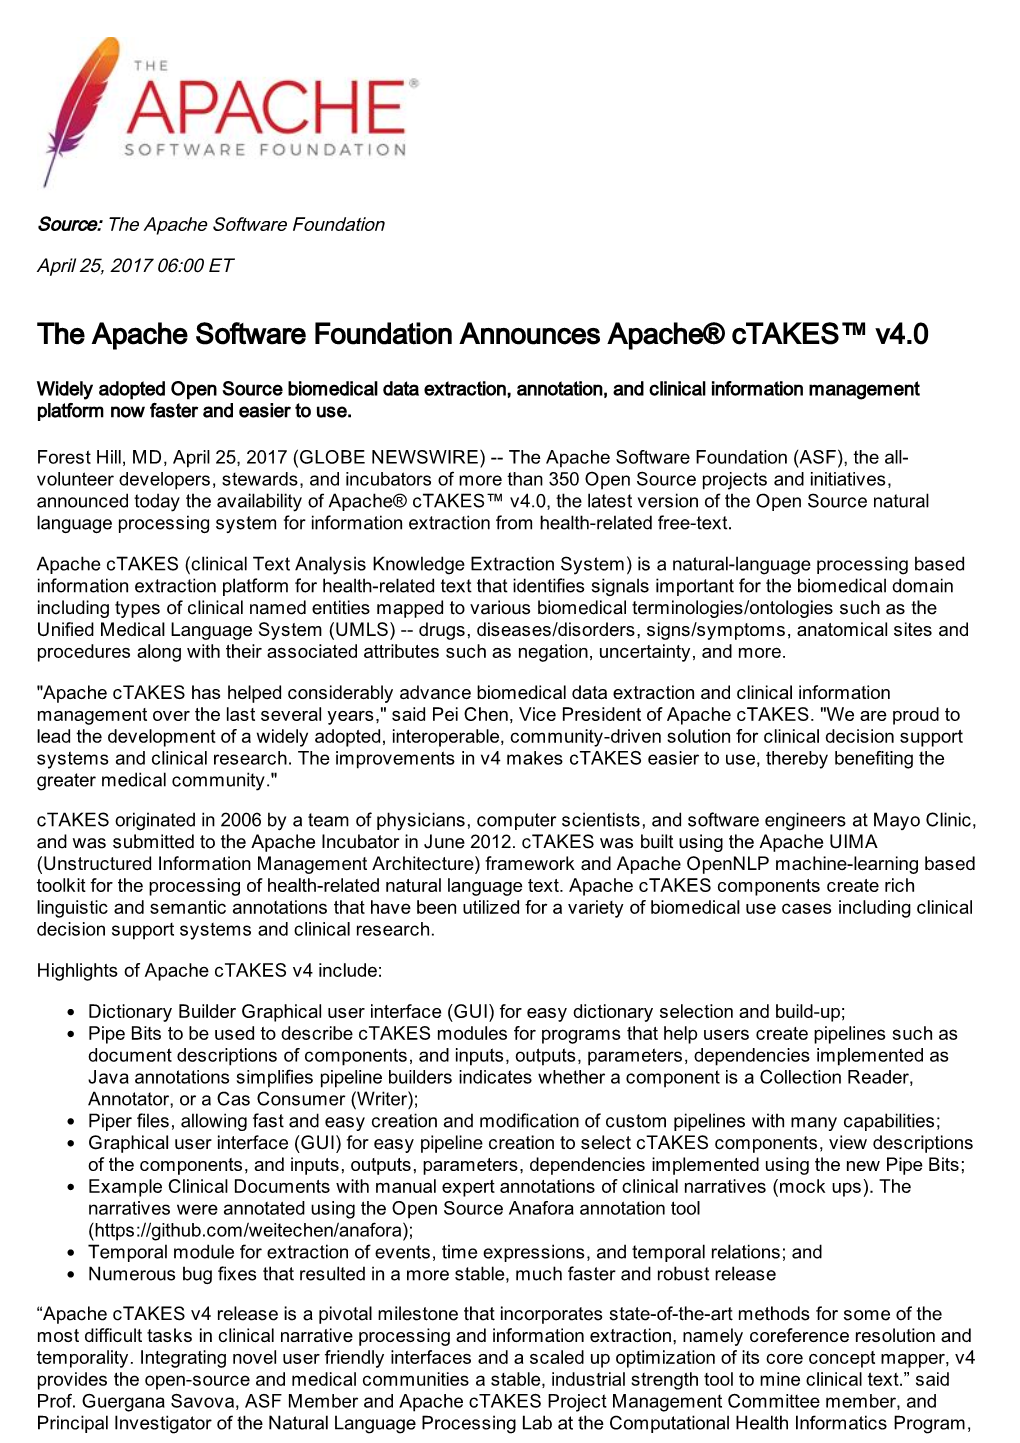 The Apache Software Foundation Announces Apache® Ctakes™ V4.0